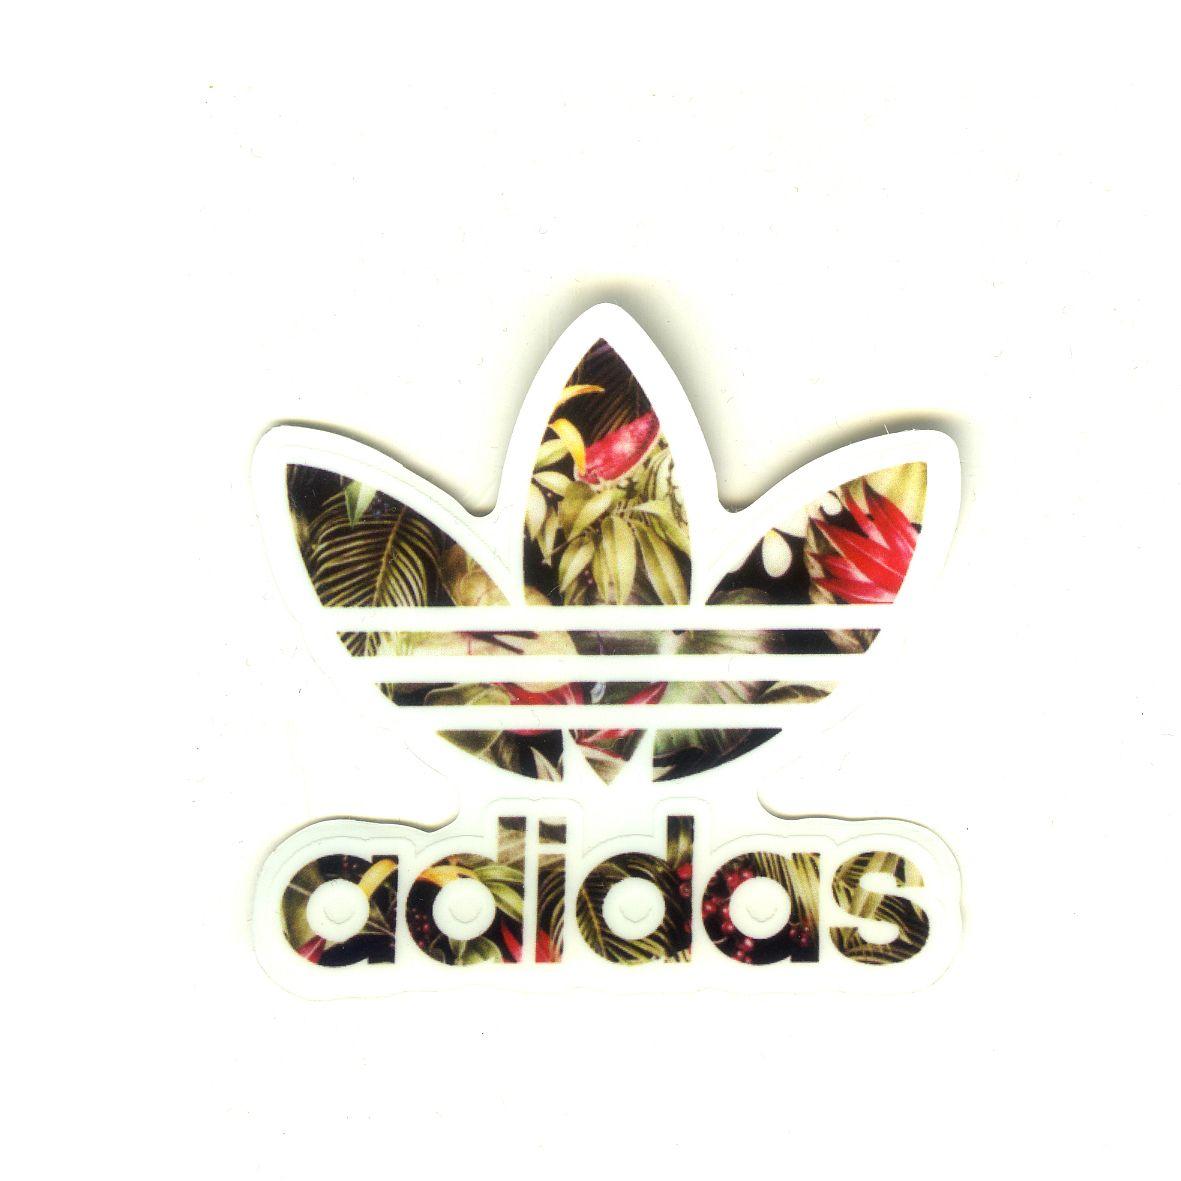 Adidas Originals Logo - 1551 adidas Originals logo flower, Width 6 cm decal sticker ...